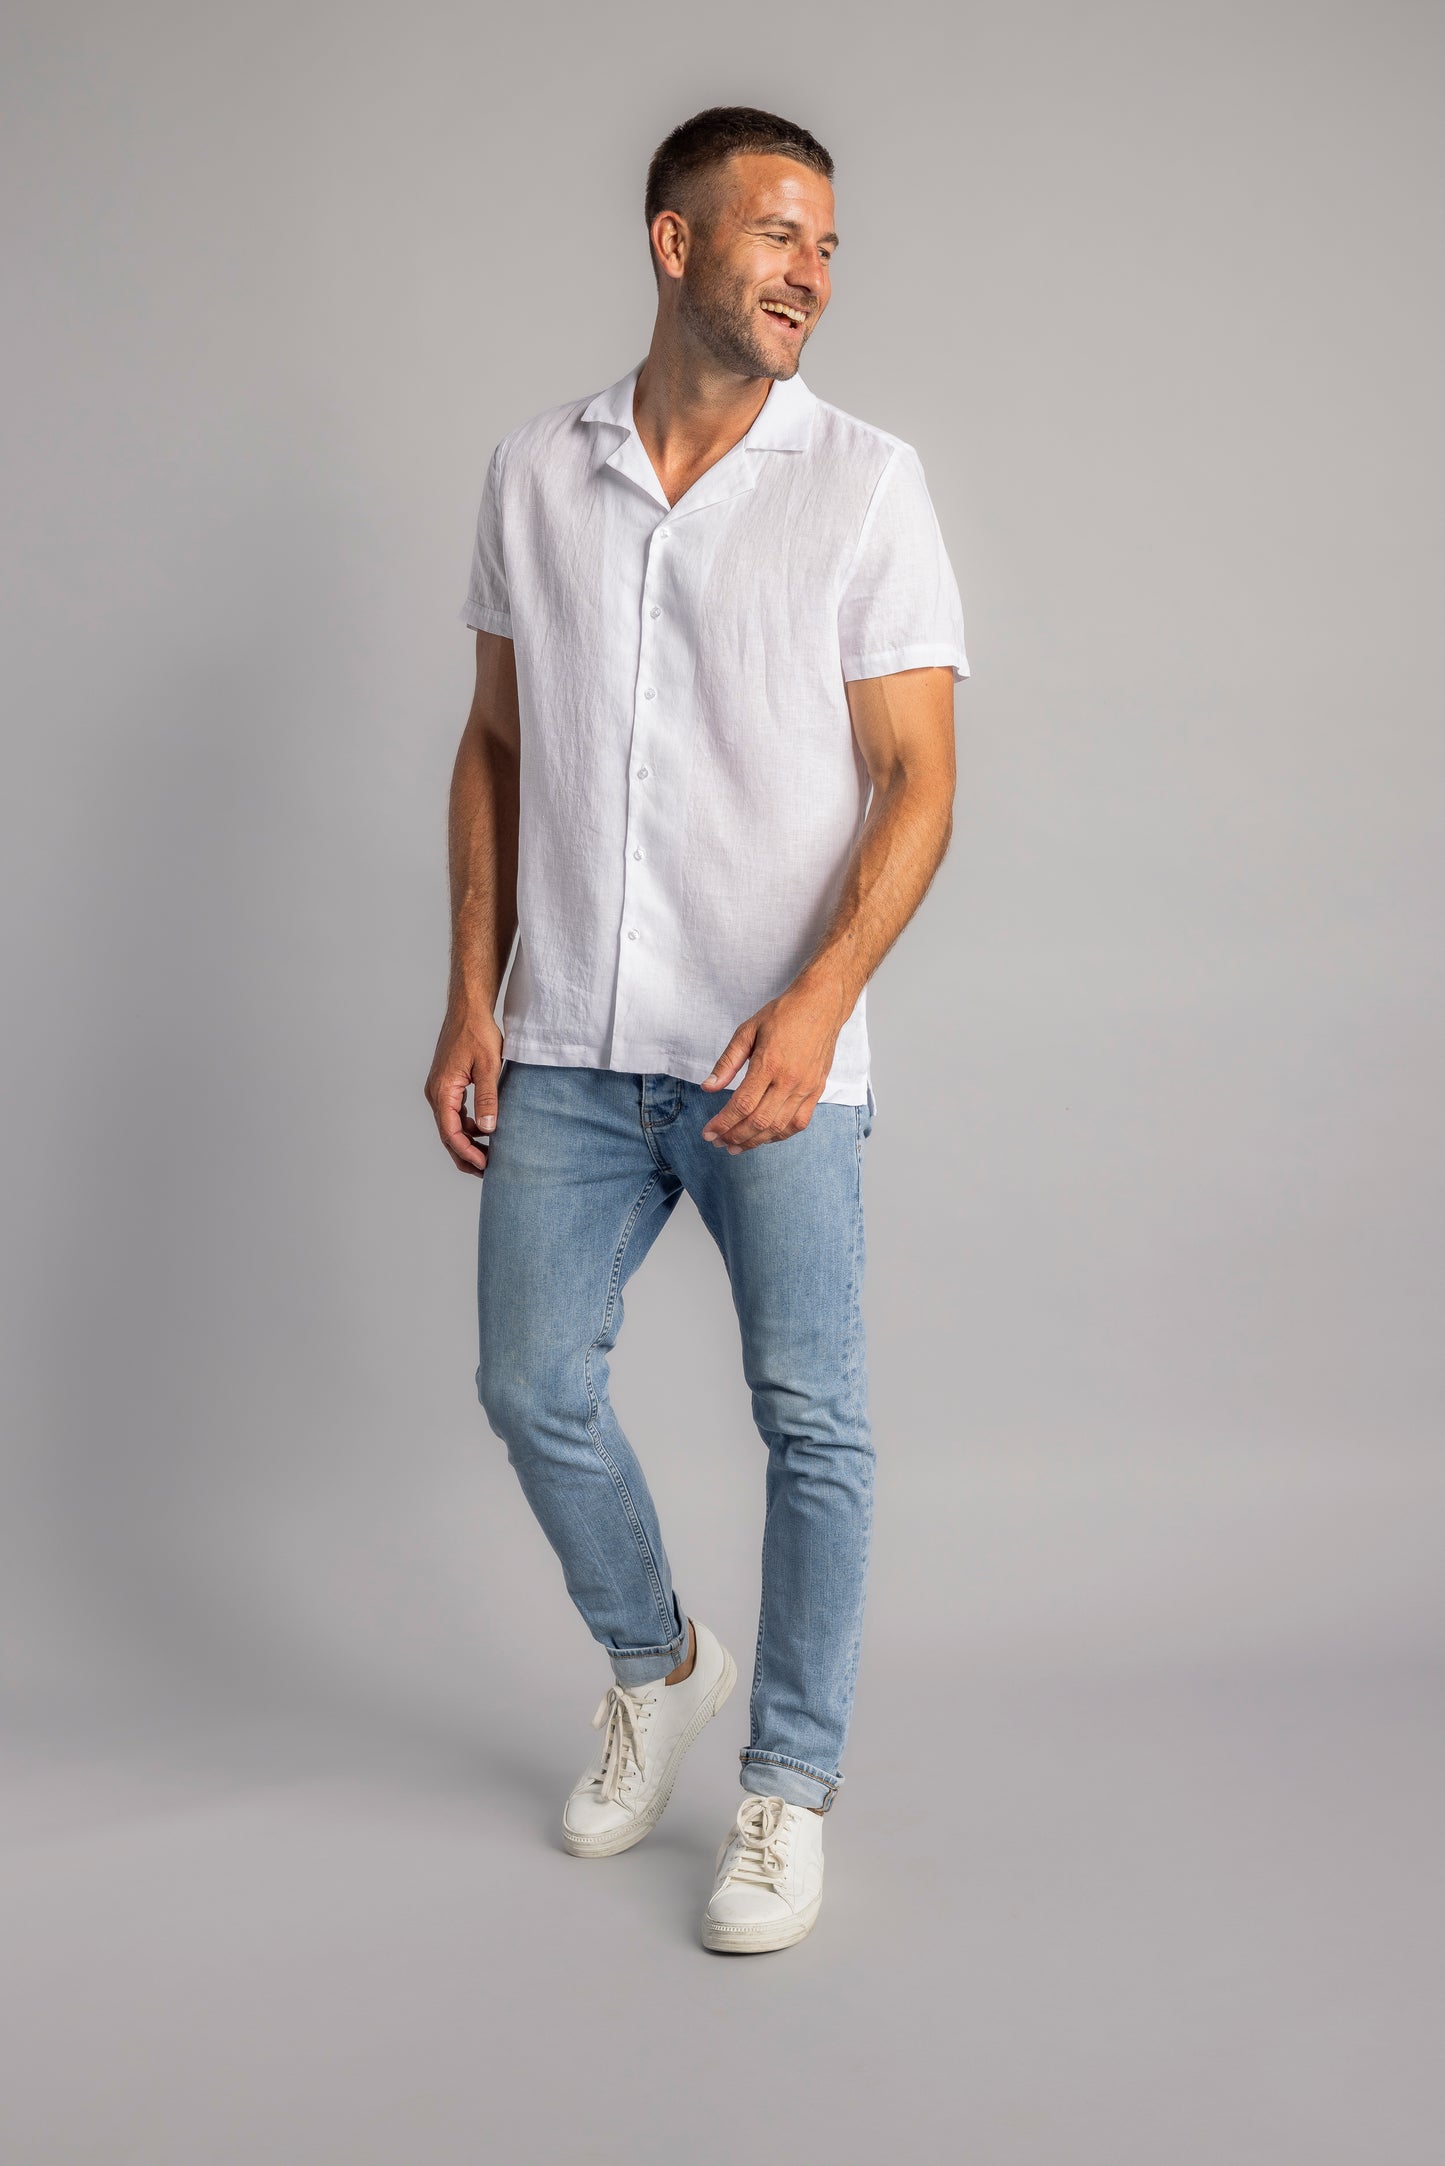 Linen shirt, white